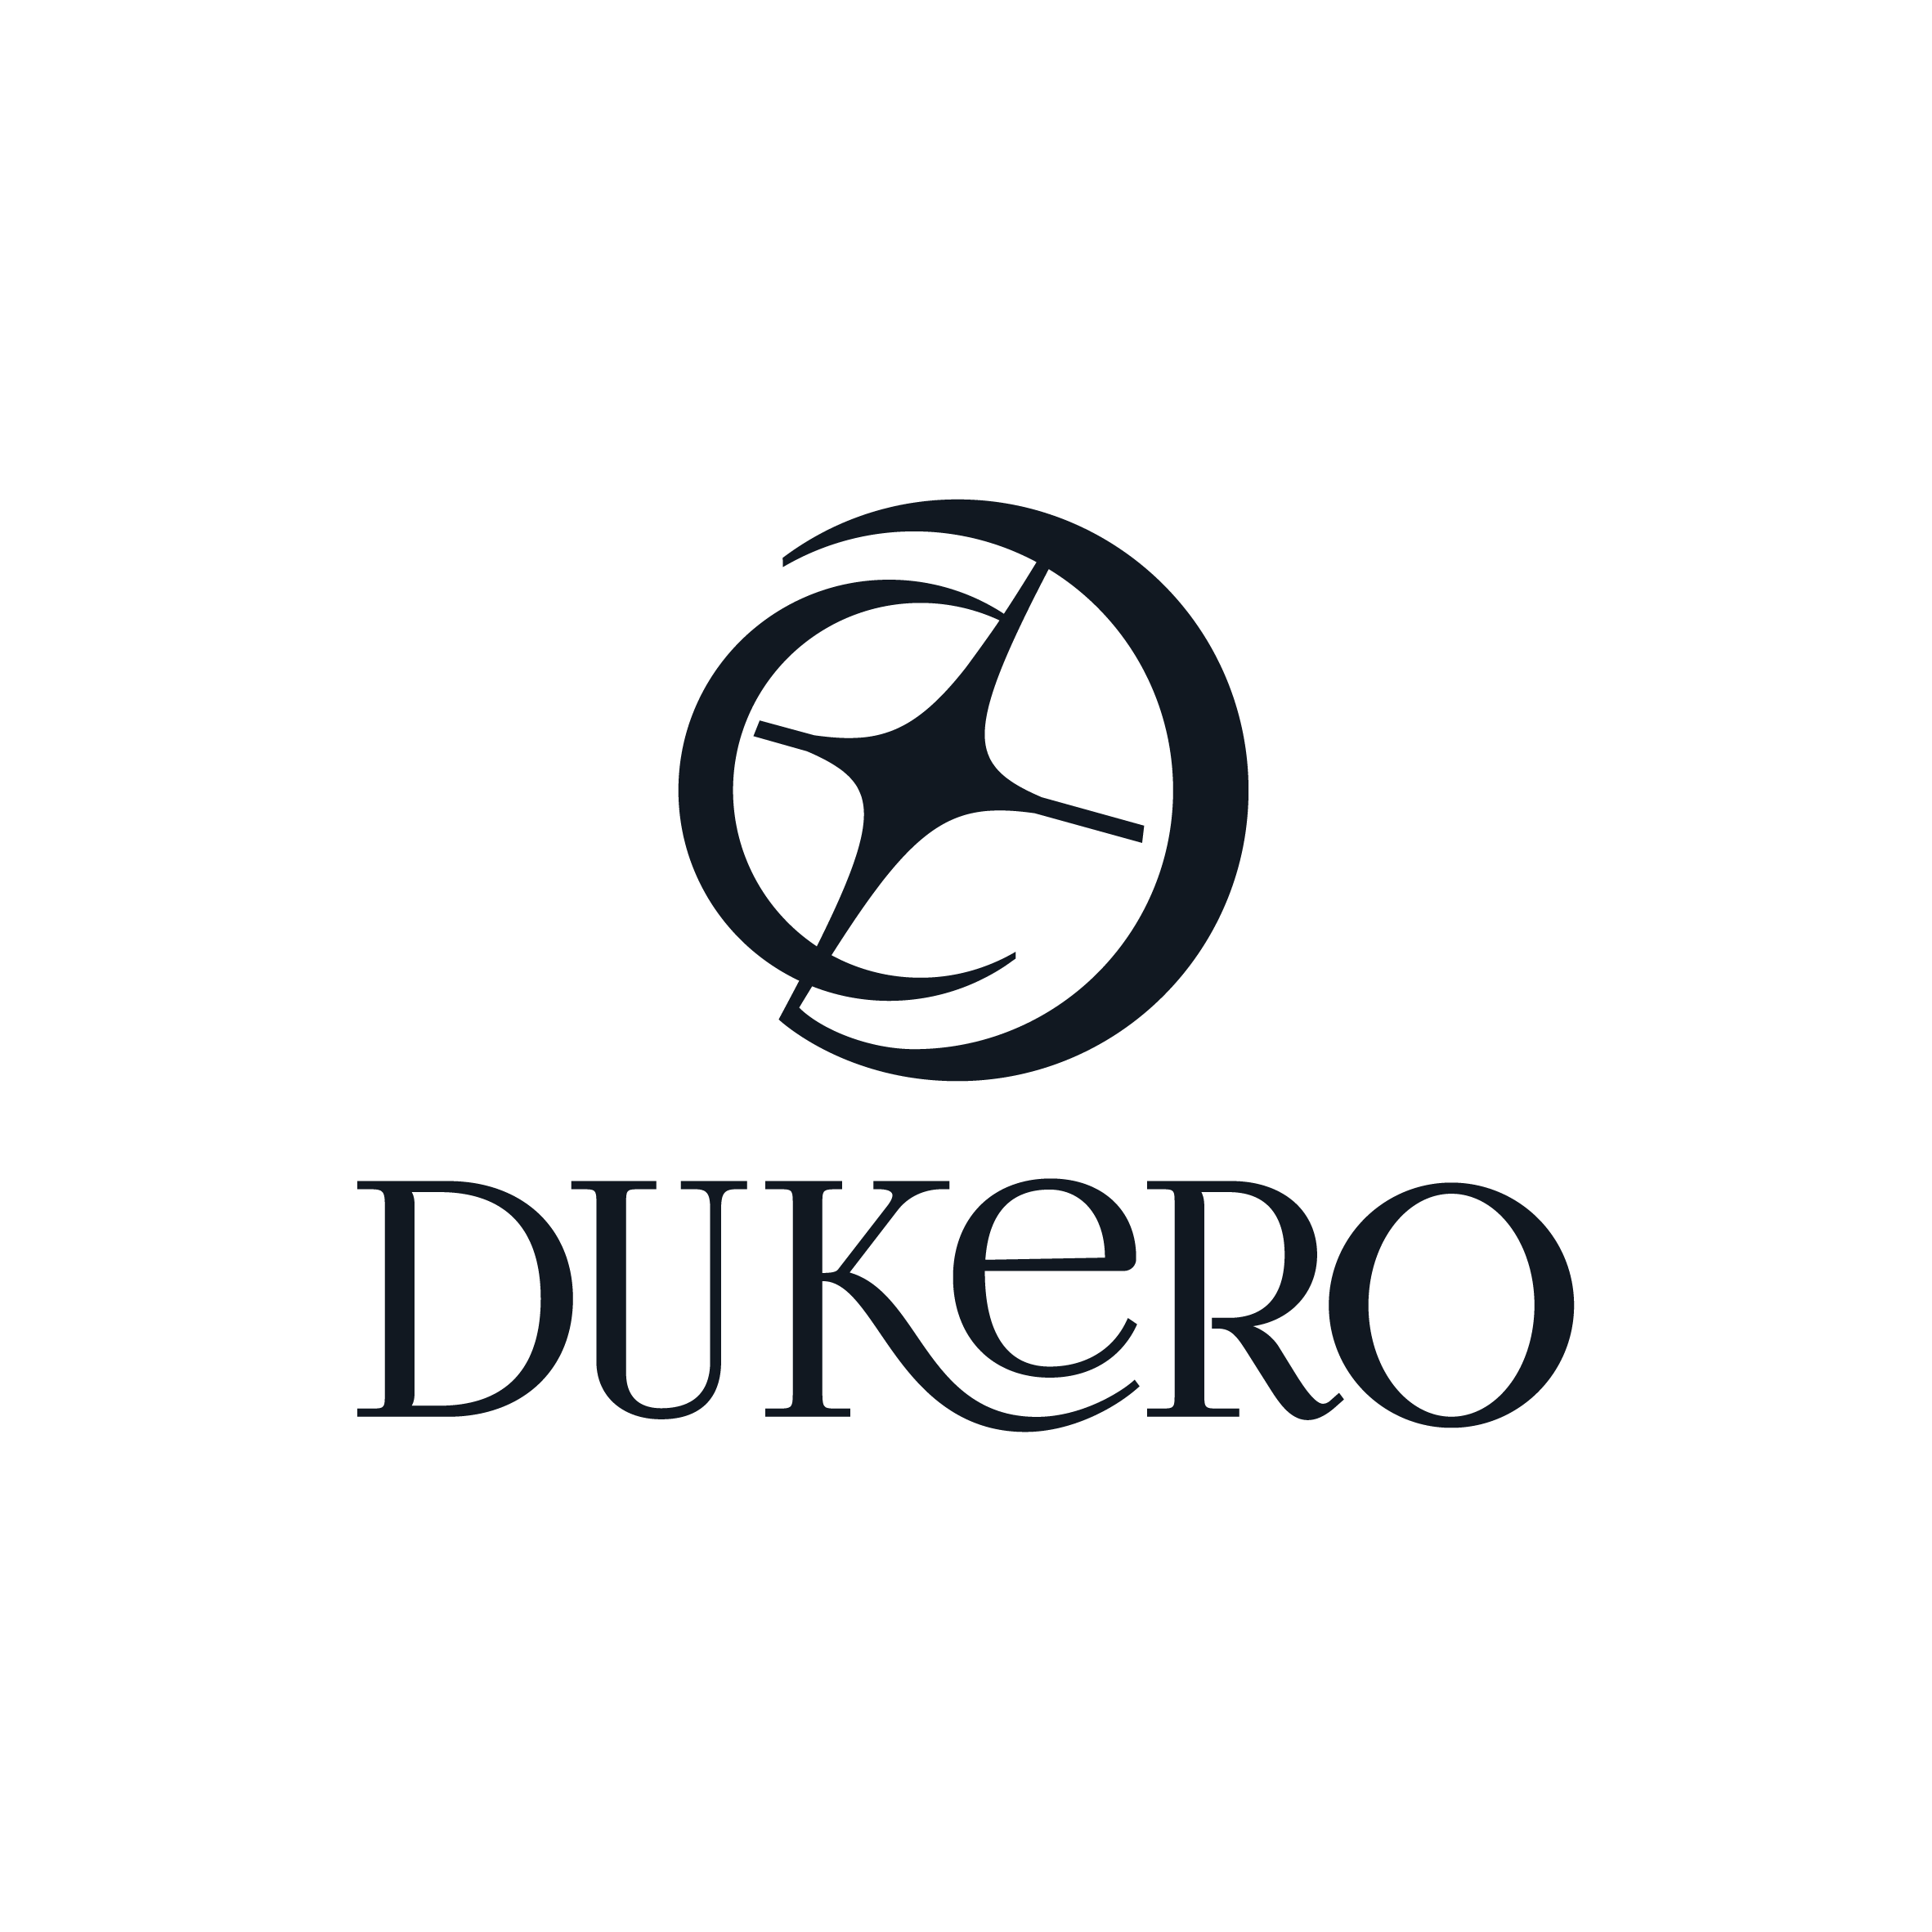 logo Dukero Officical